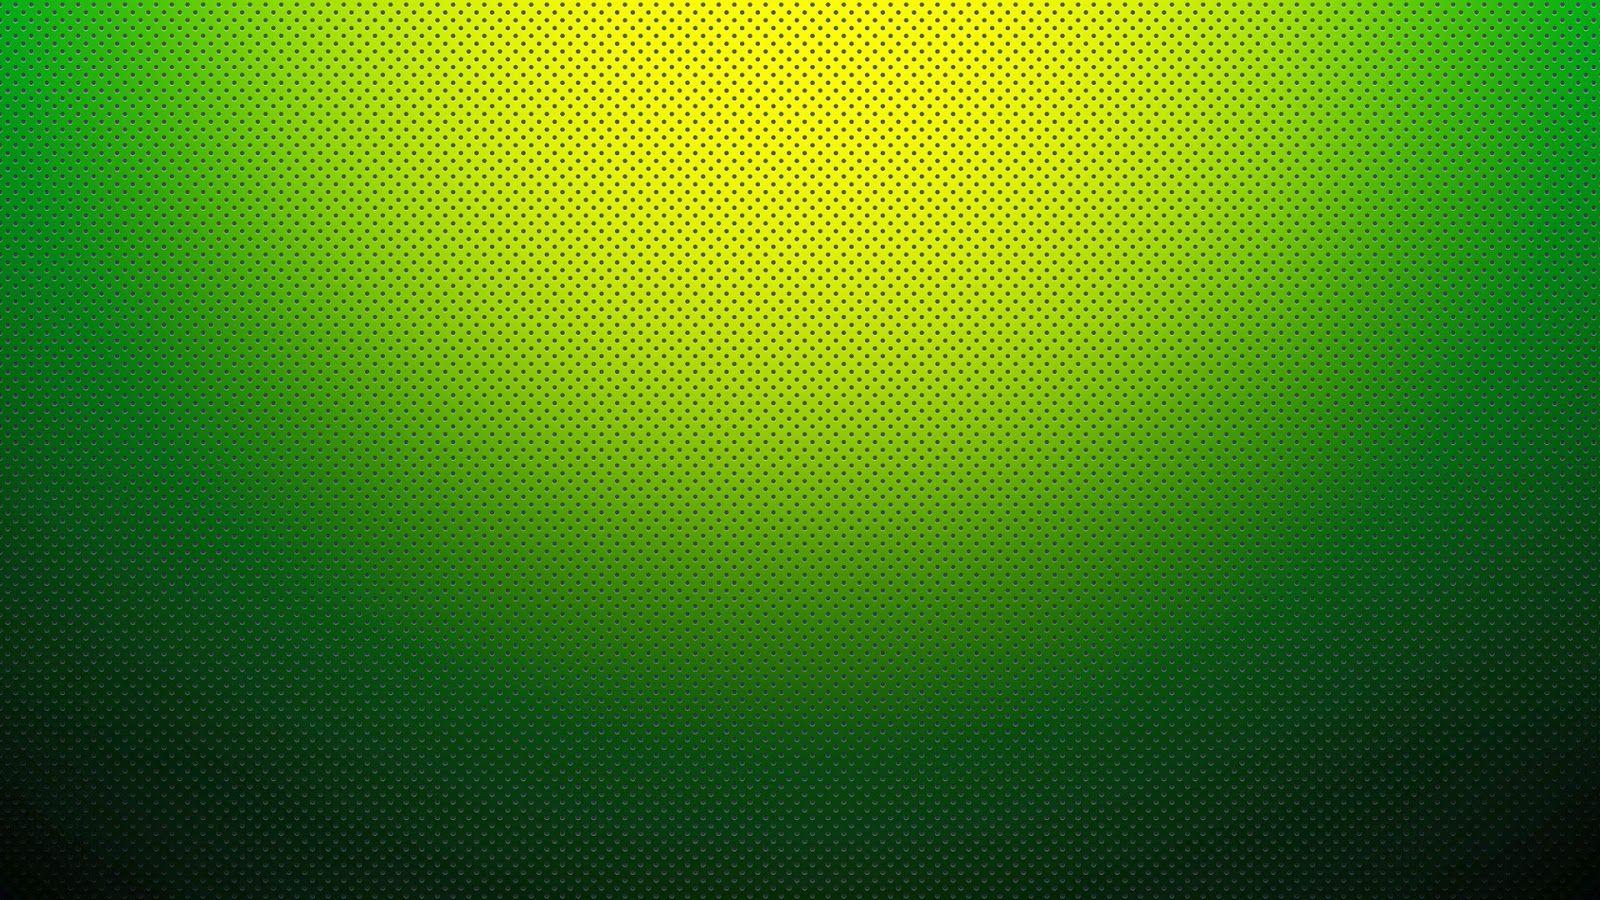 Green Background Patterns For Websites